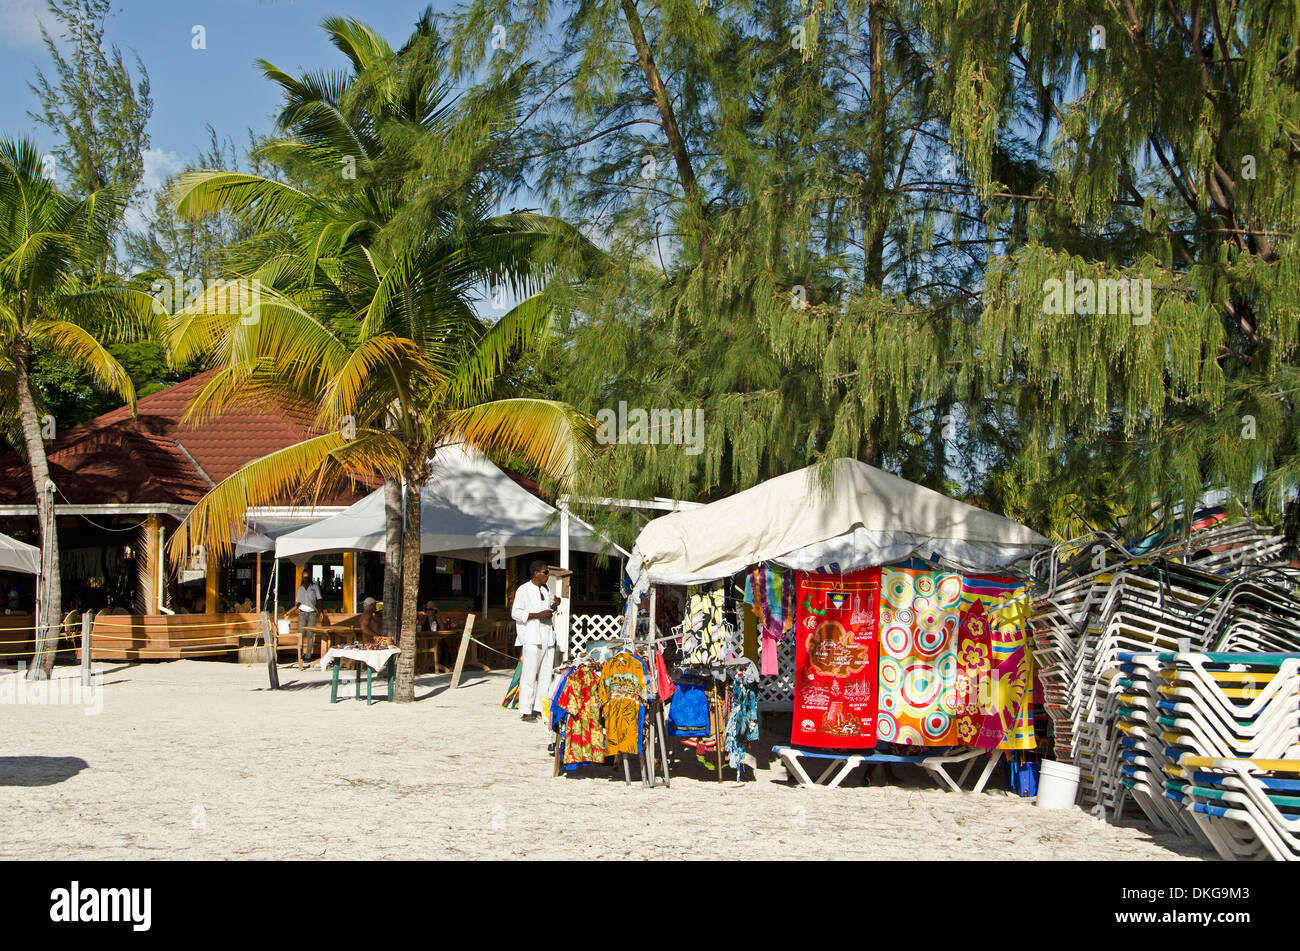 Market stall at beach, Jolly Beach, Antigua, Lesser Antilles, the Caribbean, America Stock Photo